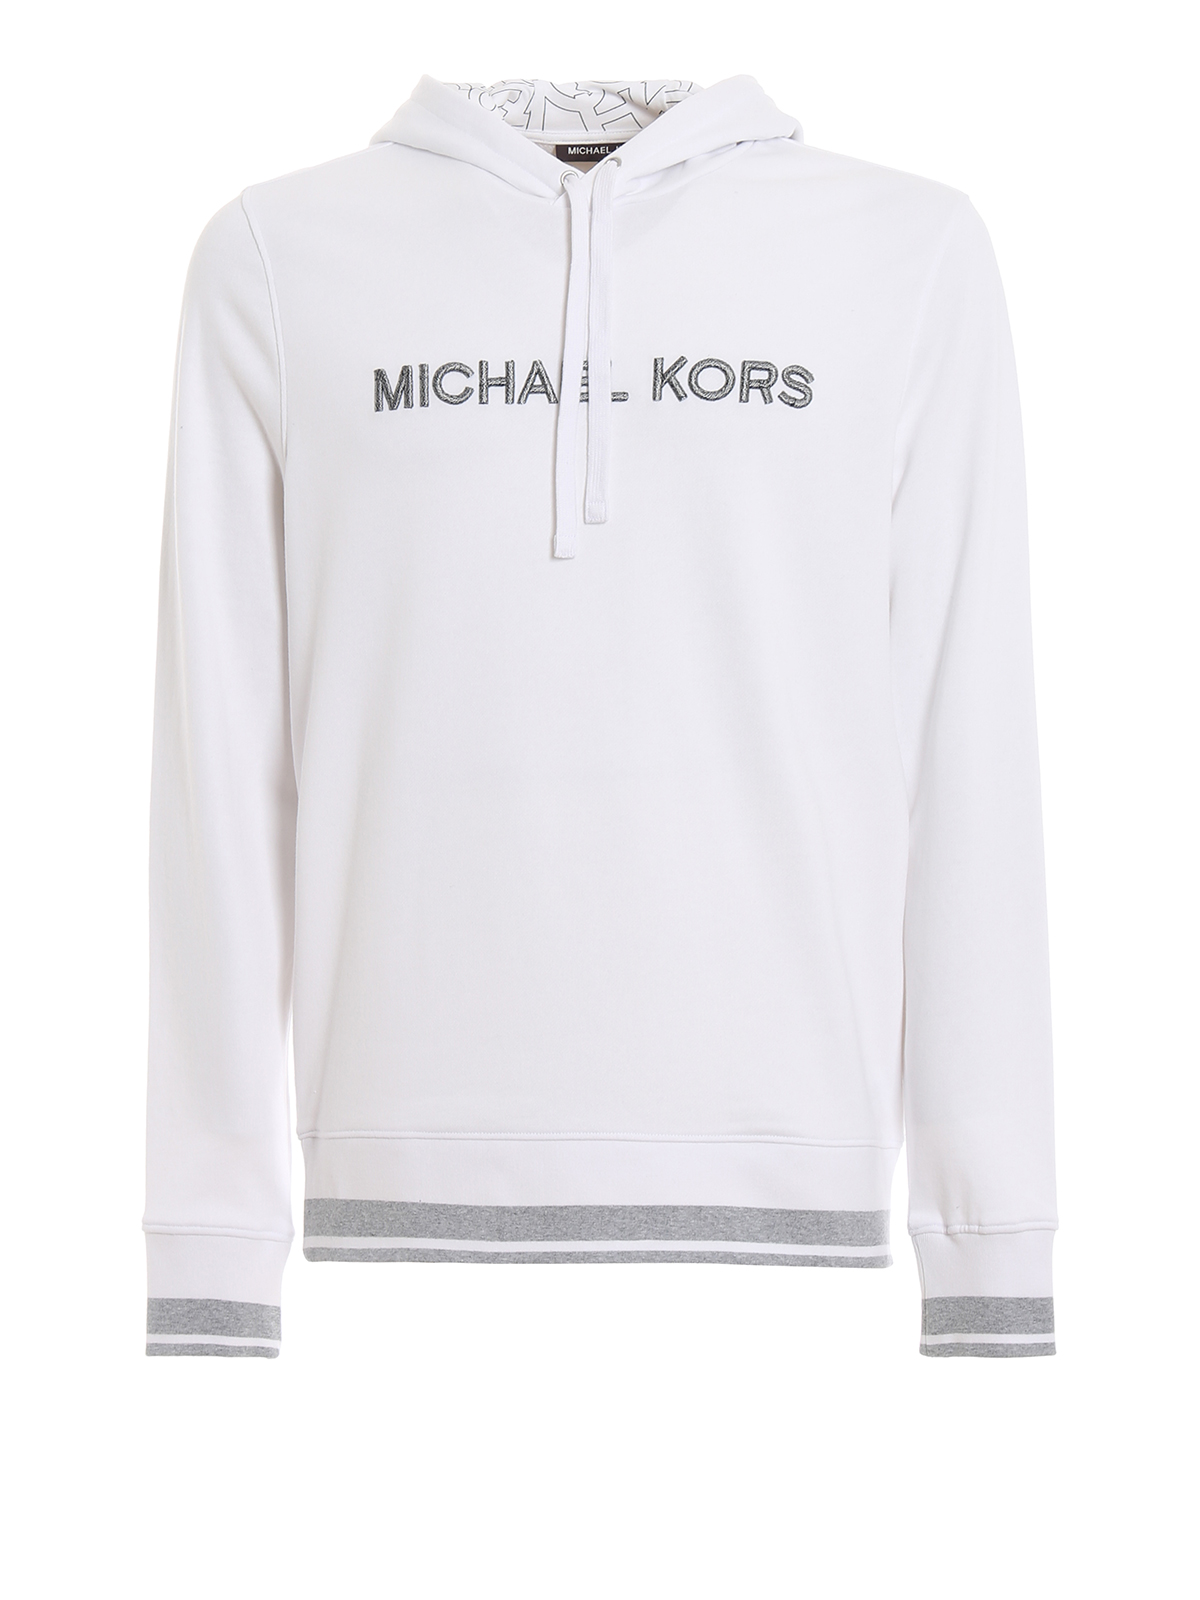 michael kors white hoodie